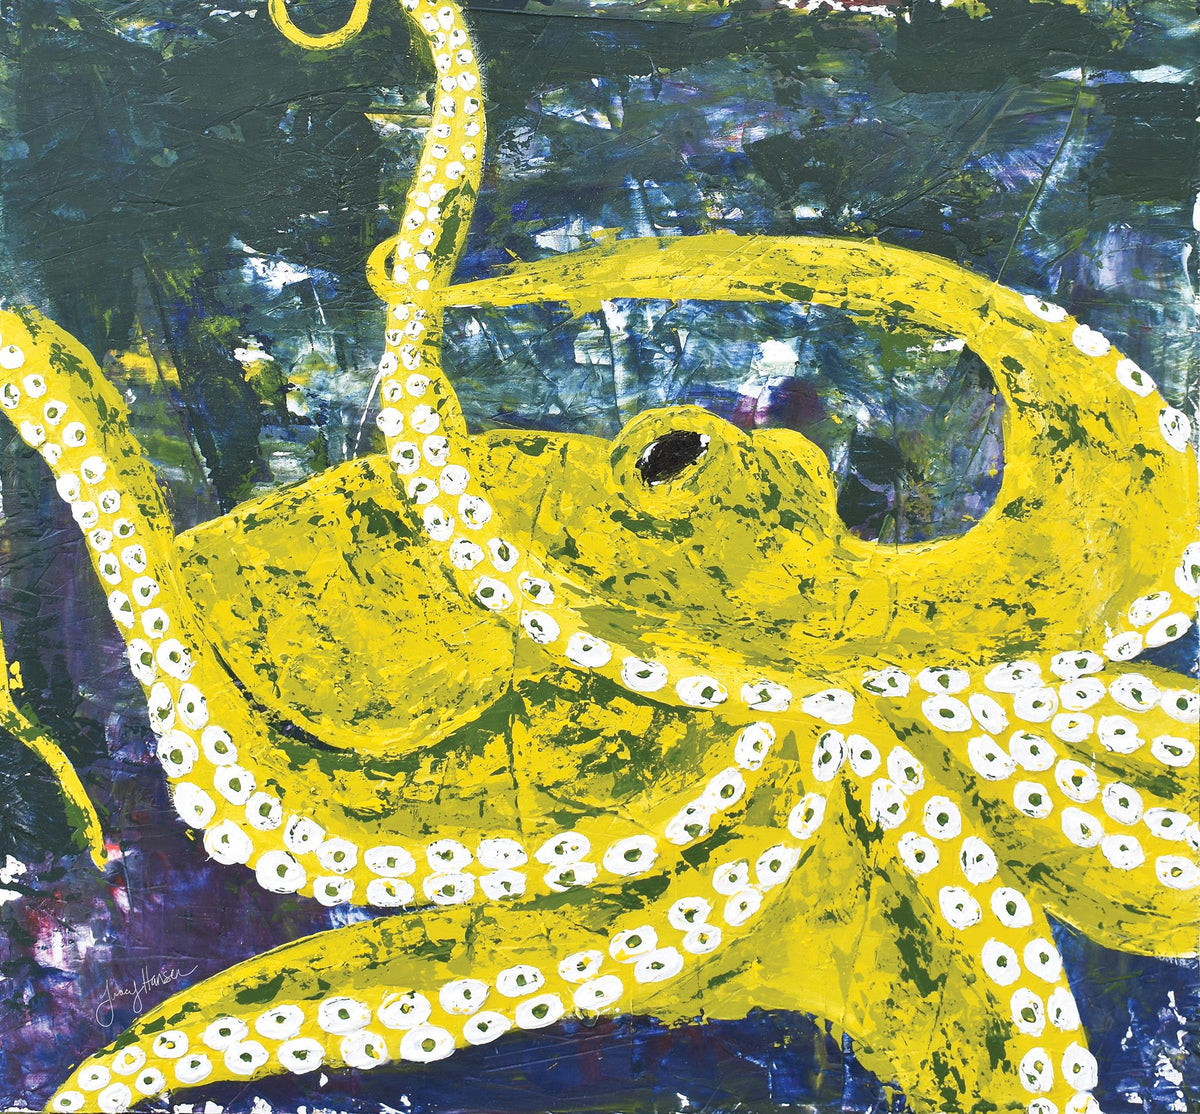 Print of an original painting &quot;Curious Yellow Octopus&quot;